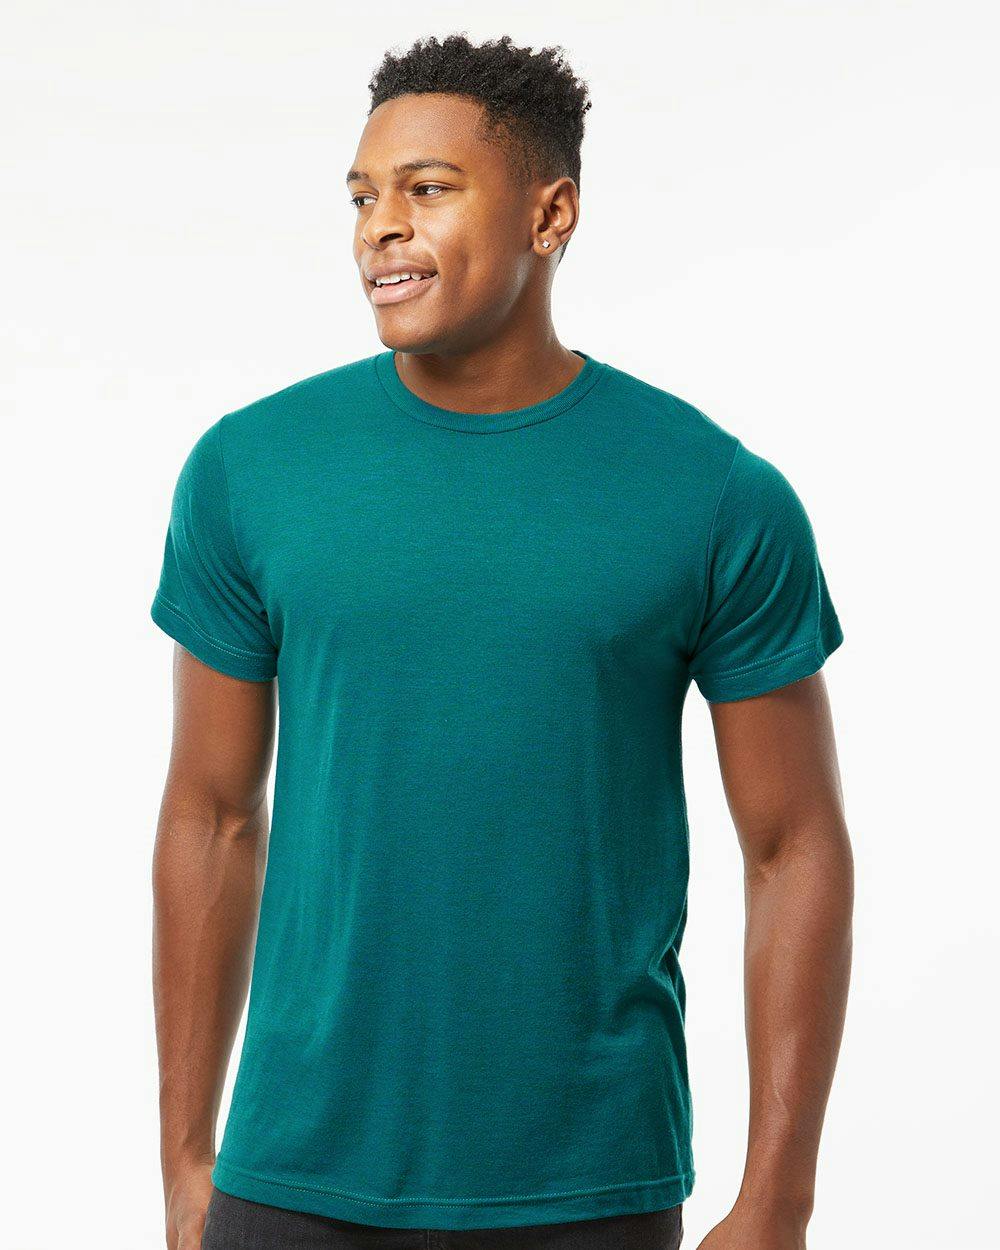 Image for Tri-Blend T-Shirt - 254